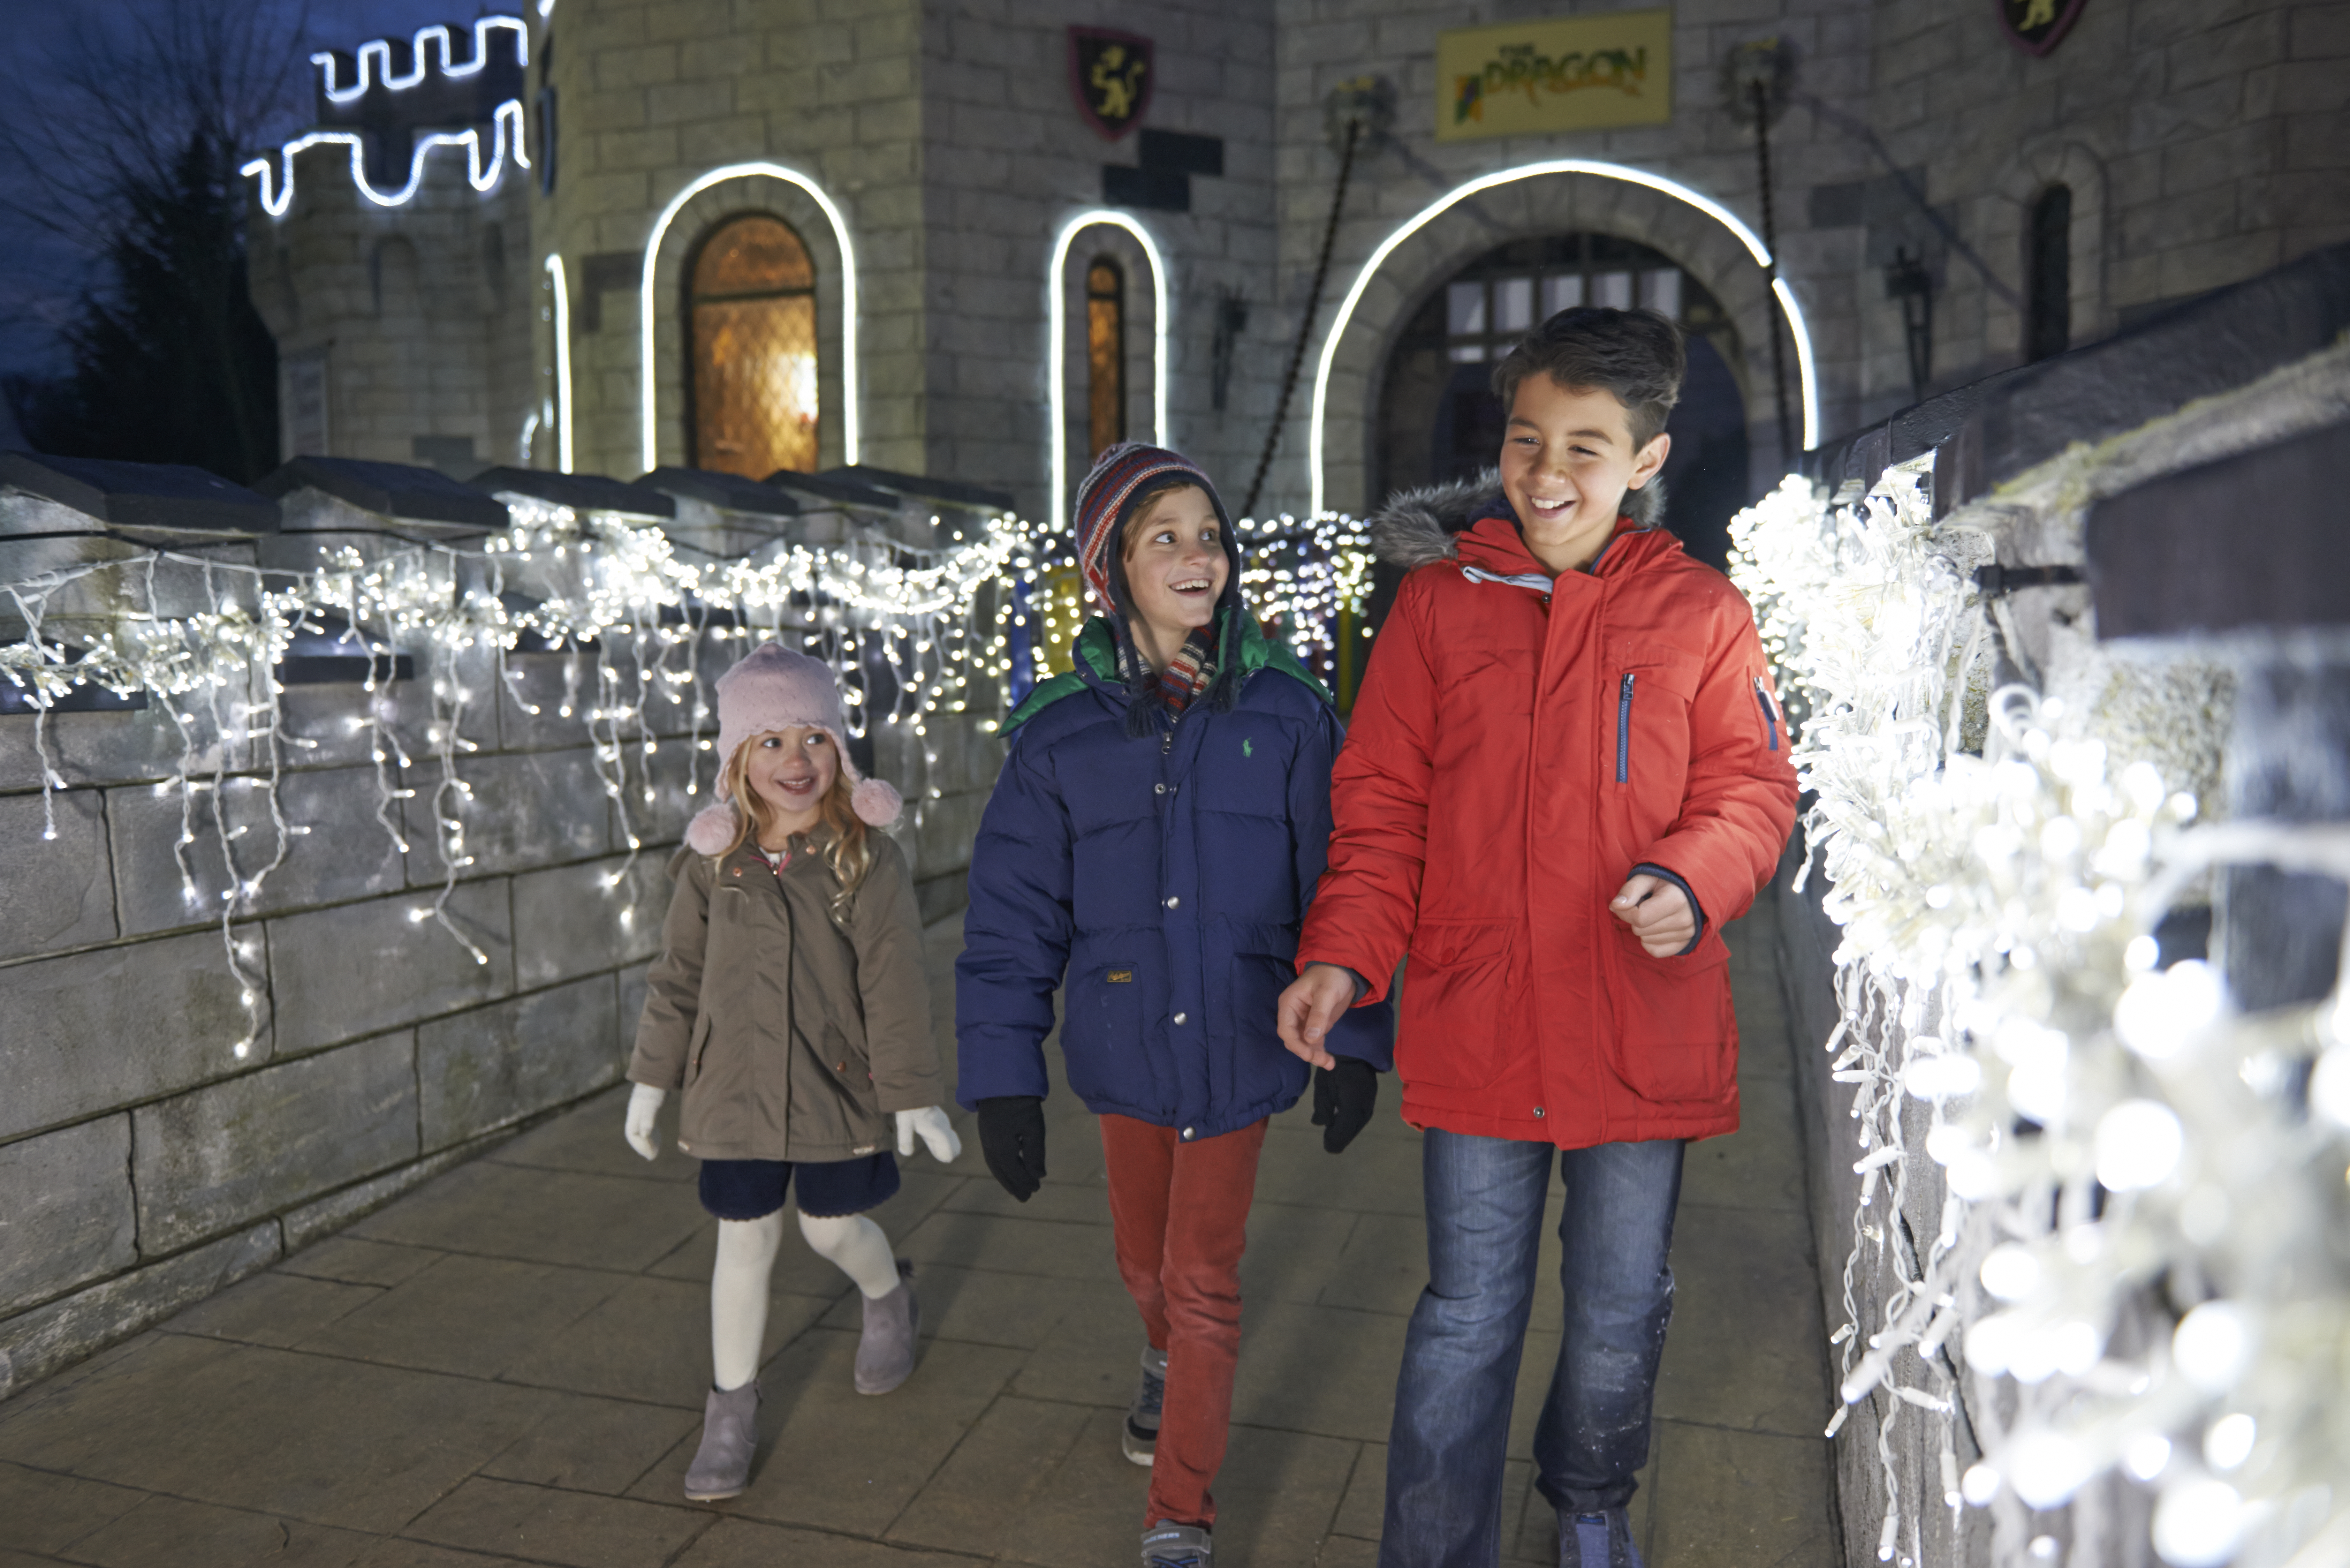 Children crossing drawbridge of lit up castle at LEGOLAND at Christmas